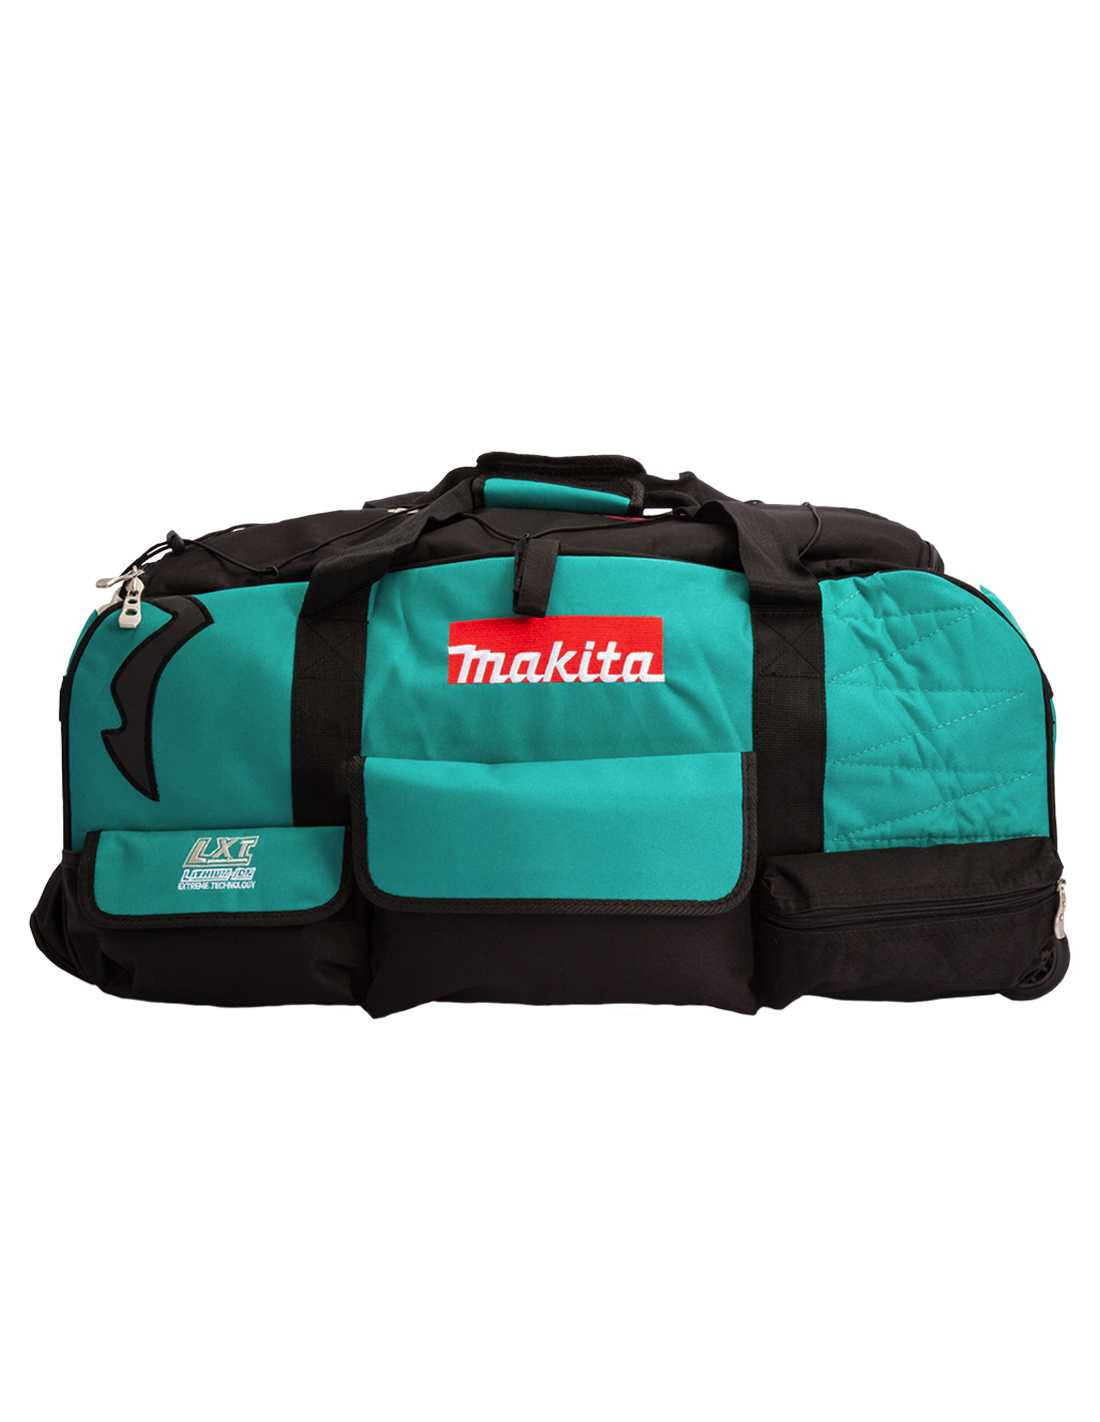 Makita kit with 9 tools + 3 5.0Ah bat + charger + 2 bags DLX9243BL3